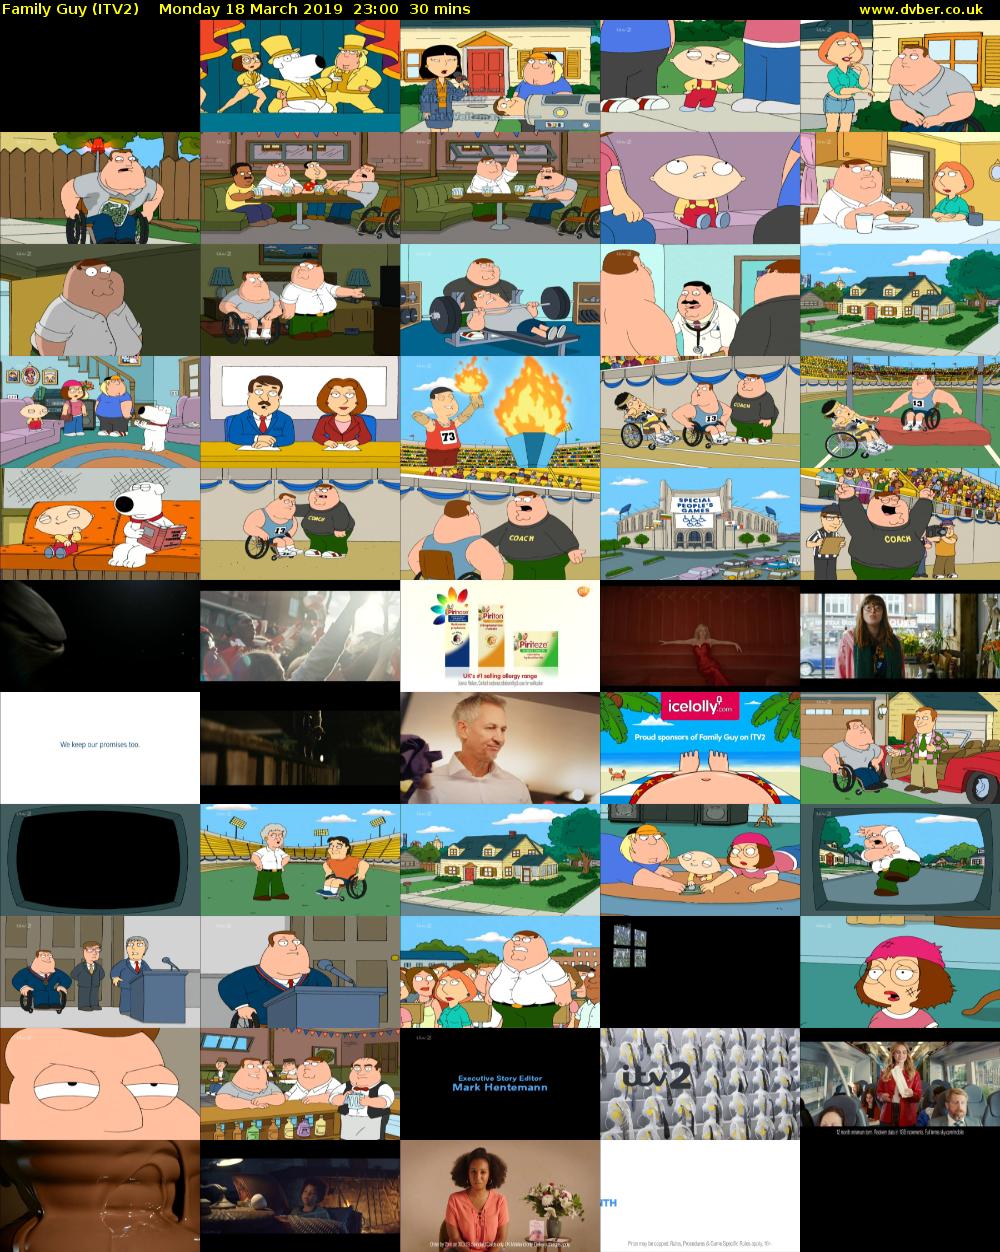 Family Guy (ITV2) Monday 18 March 2019 23:00 - 23:30